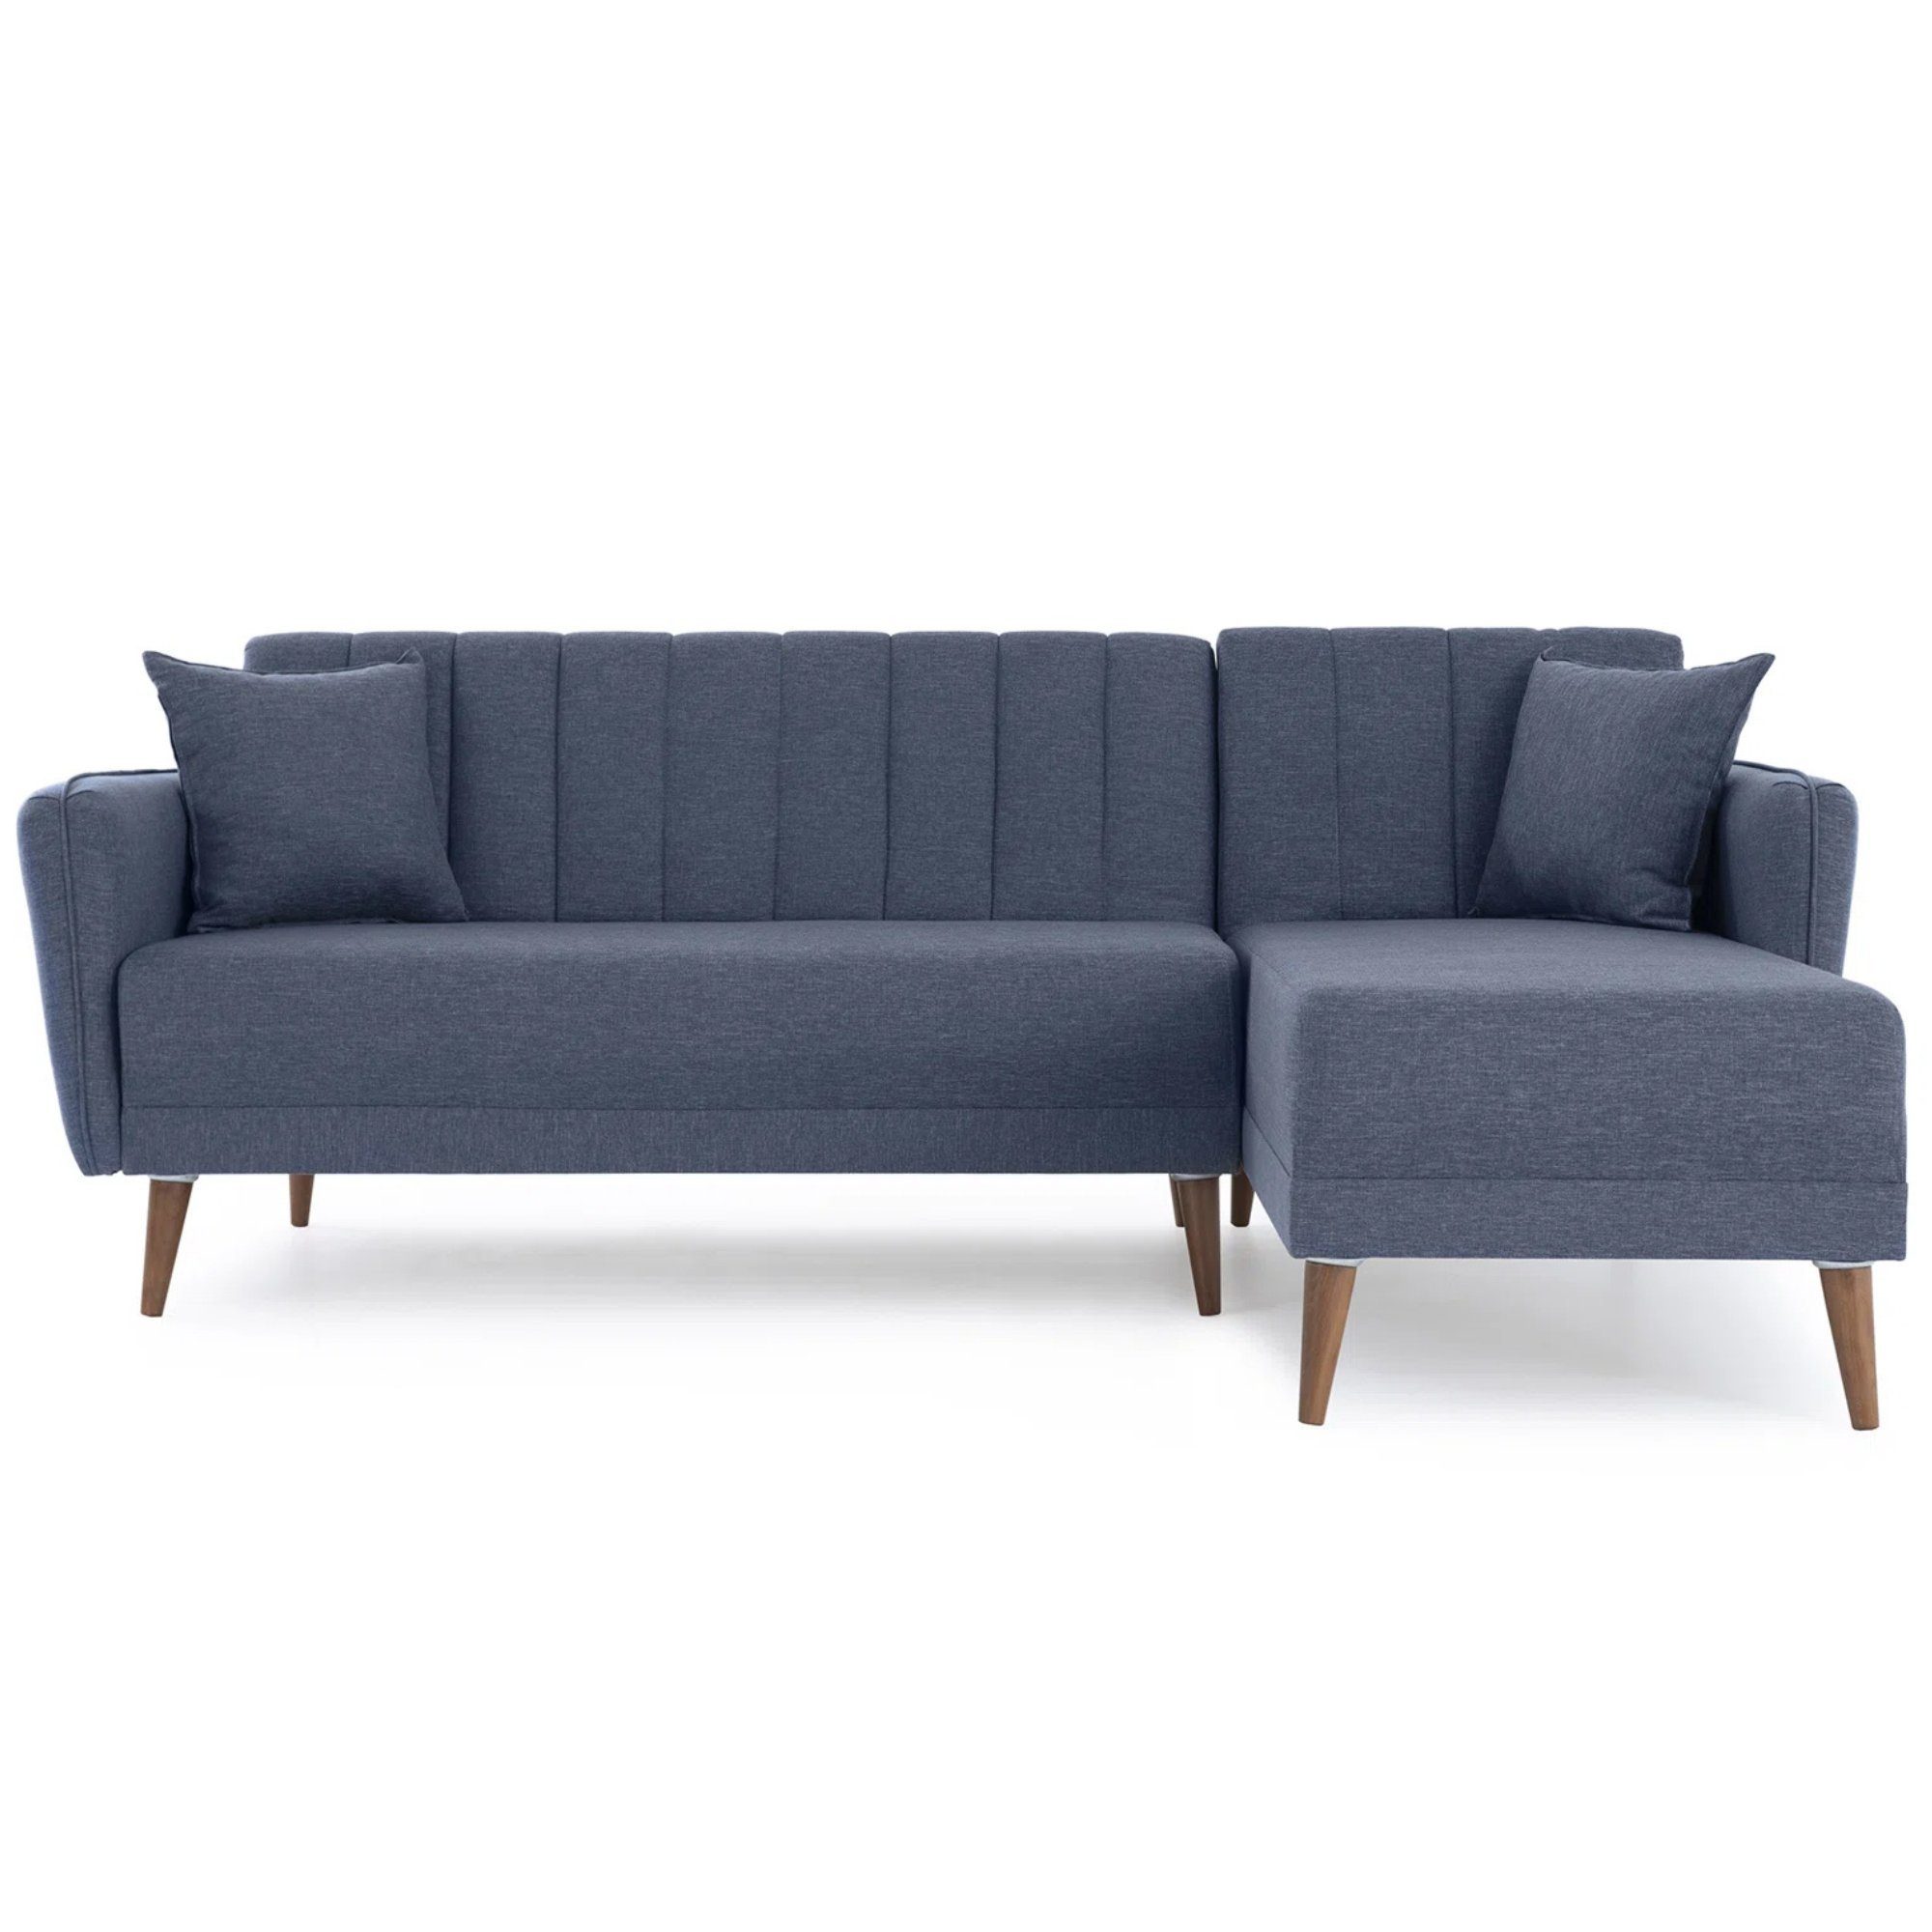 Ecksofa mit Ecksofa, Gozos Blau x 85 Gozos cm, Sitzgruppe 150 Couch, x 225 Relaxfunktion Bettfunktion Mammo Navy